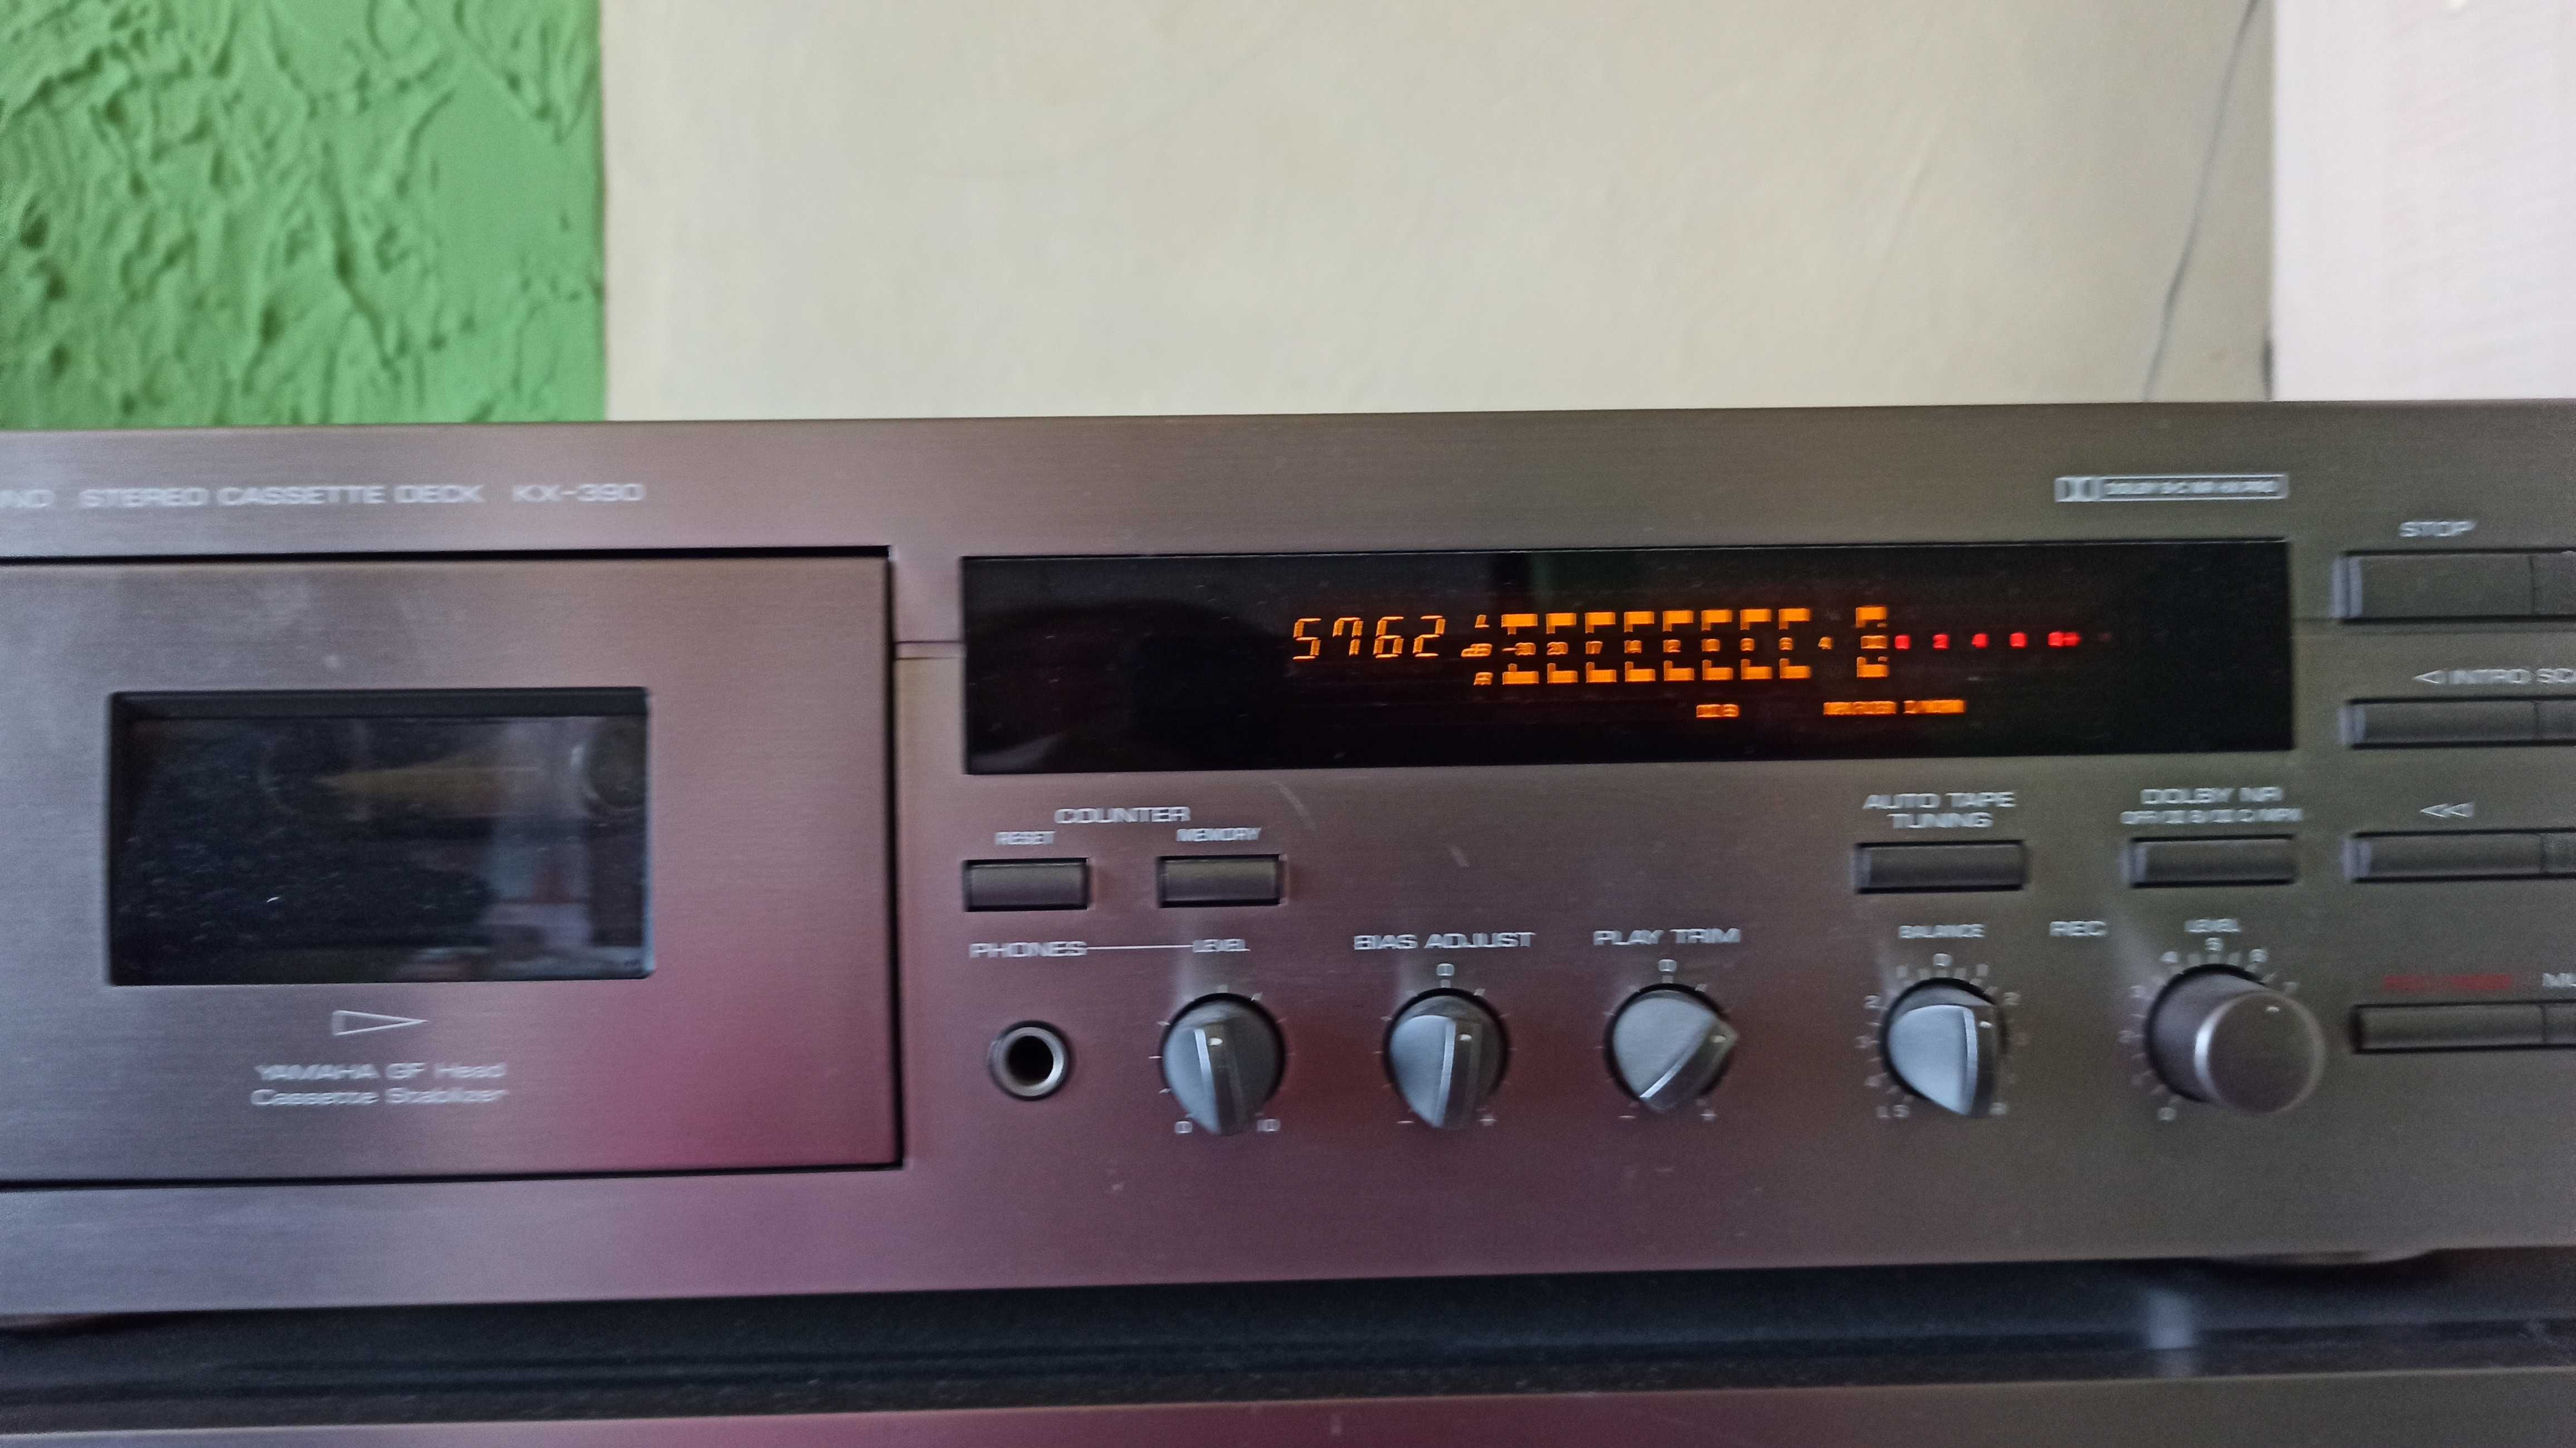 Yamaha magnetofon kasetowy stereo DECK KX 390